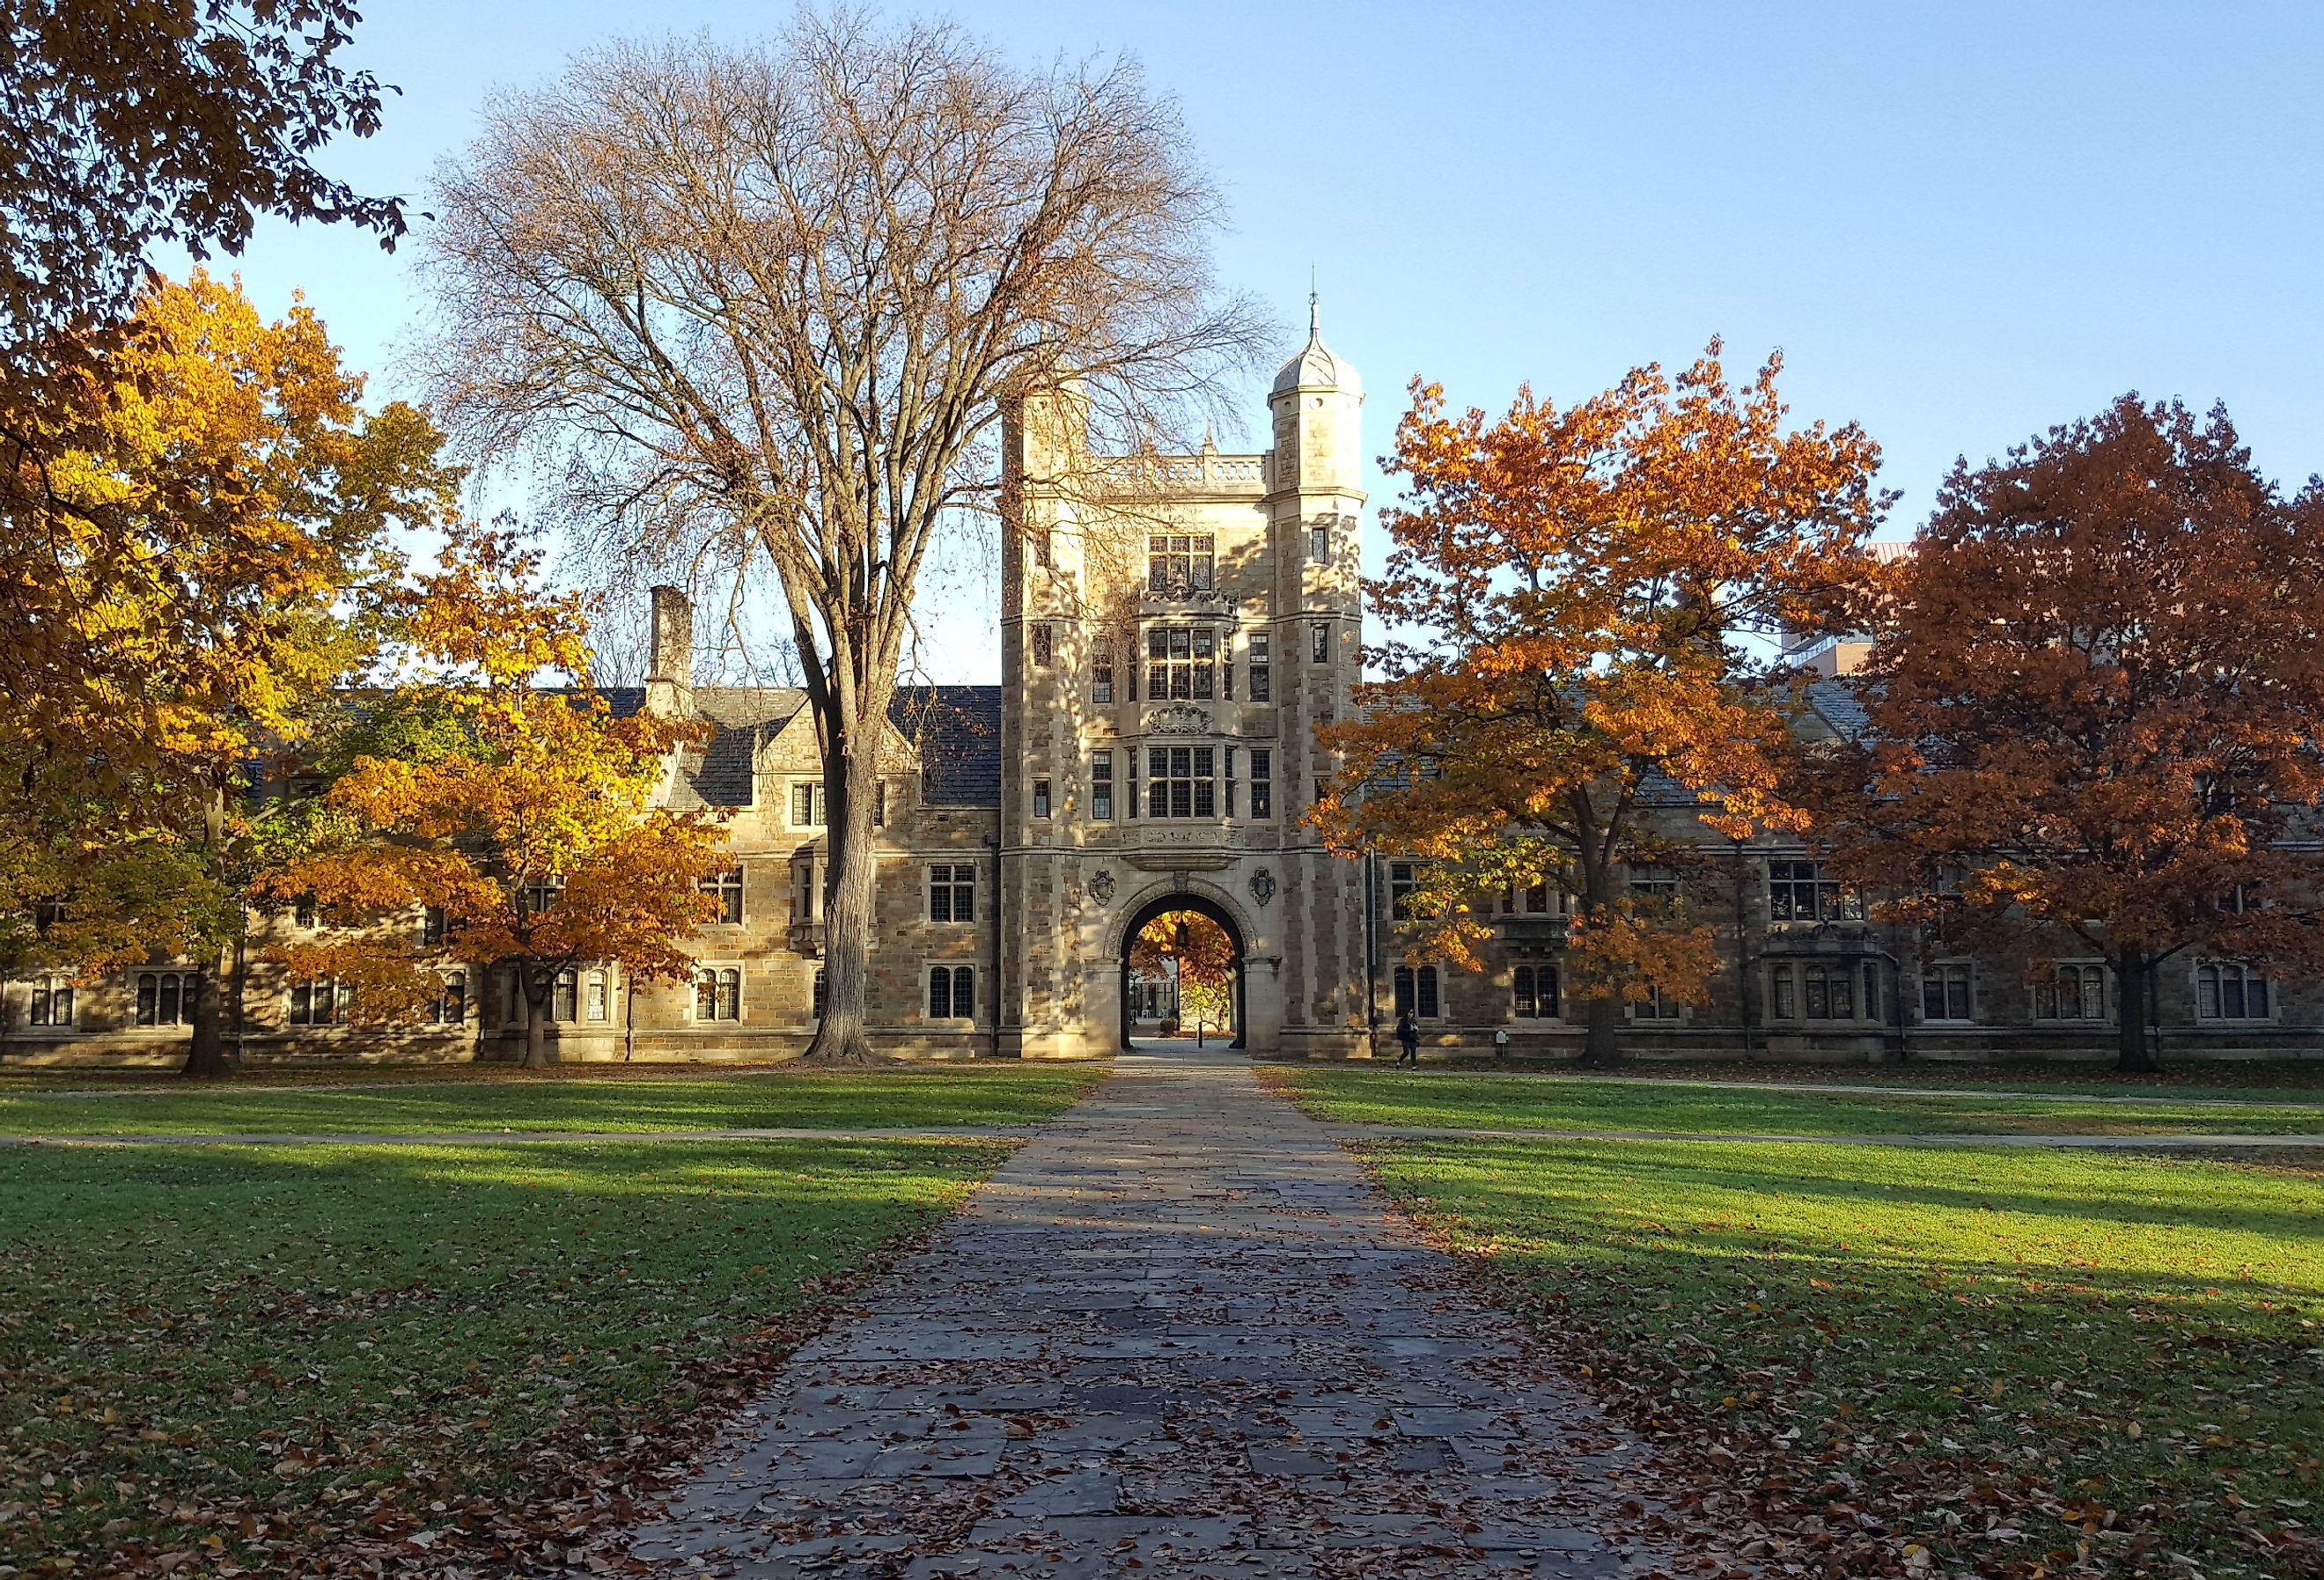 University of Michigan building in Ann Arbor, Michigan. Image credit Dark Vader via Shutterstock.